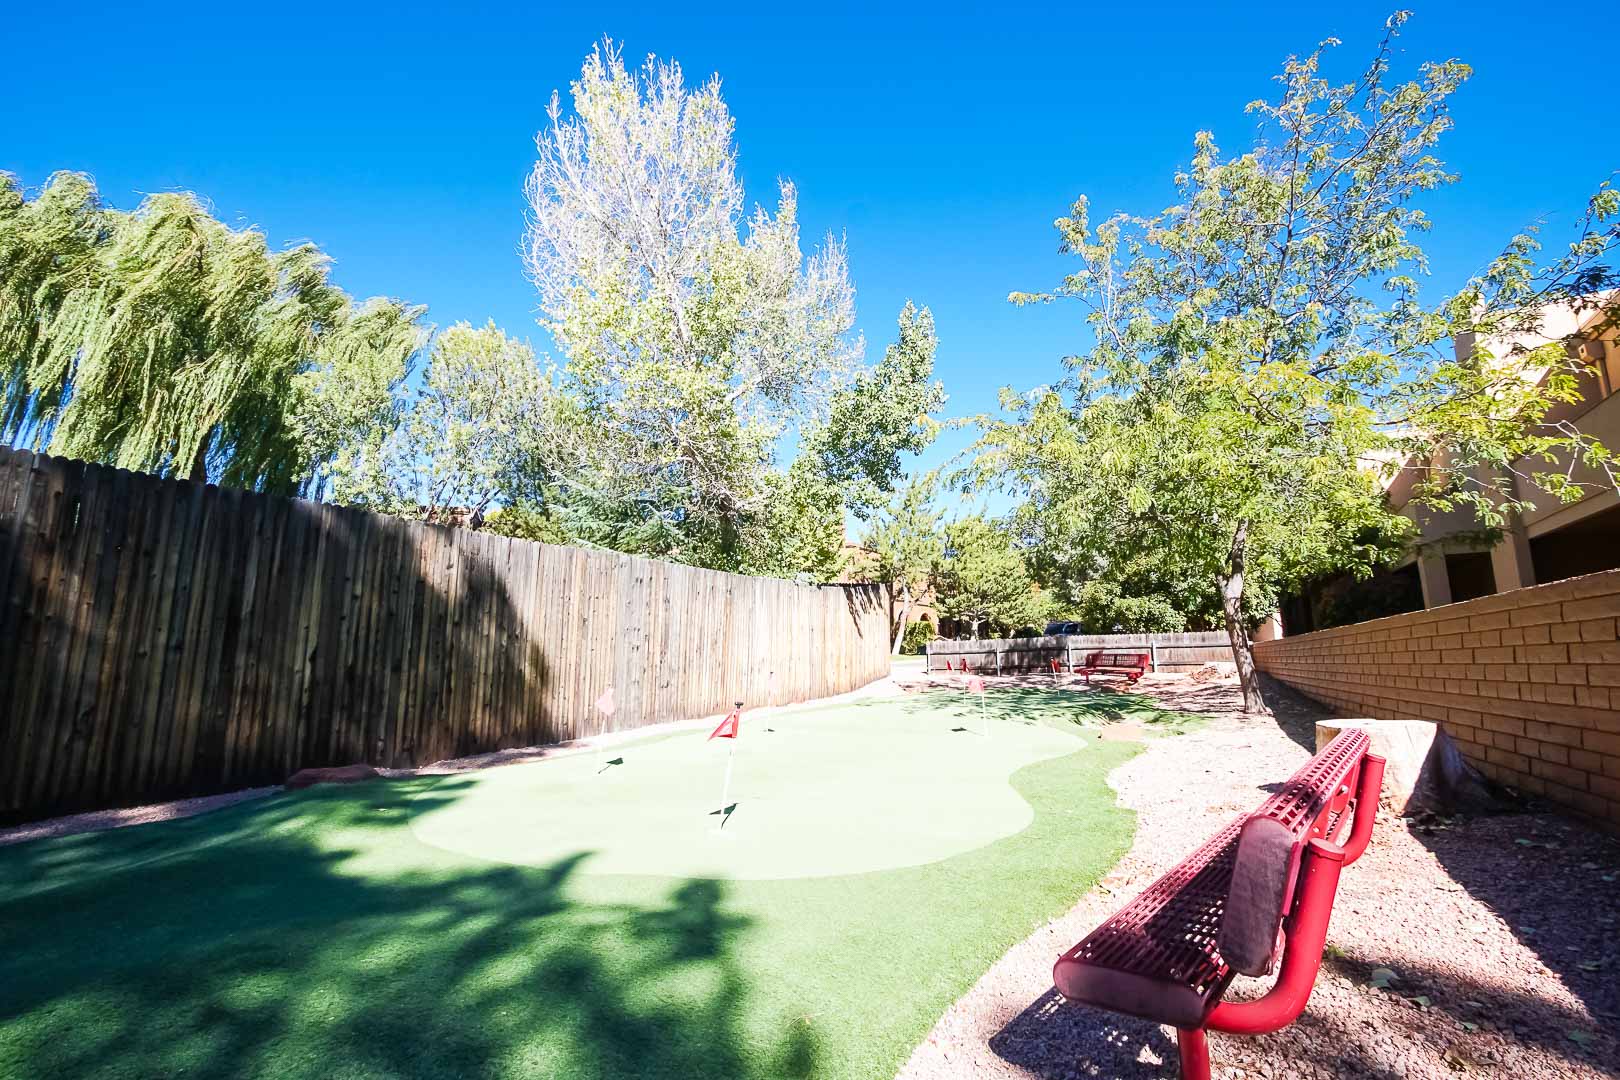 An outdoor putting green at VRI's Villas of Sedona in Arizona.